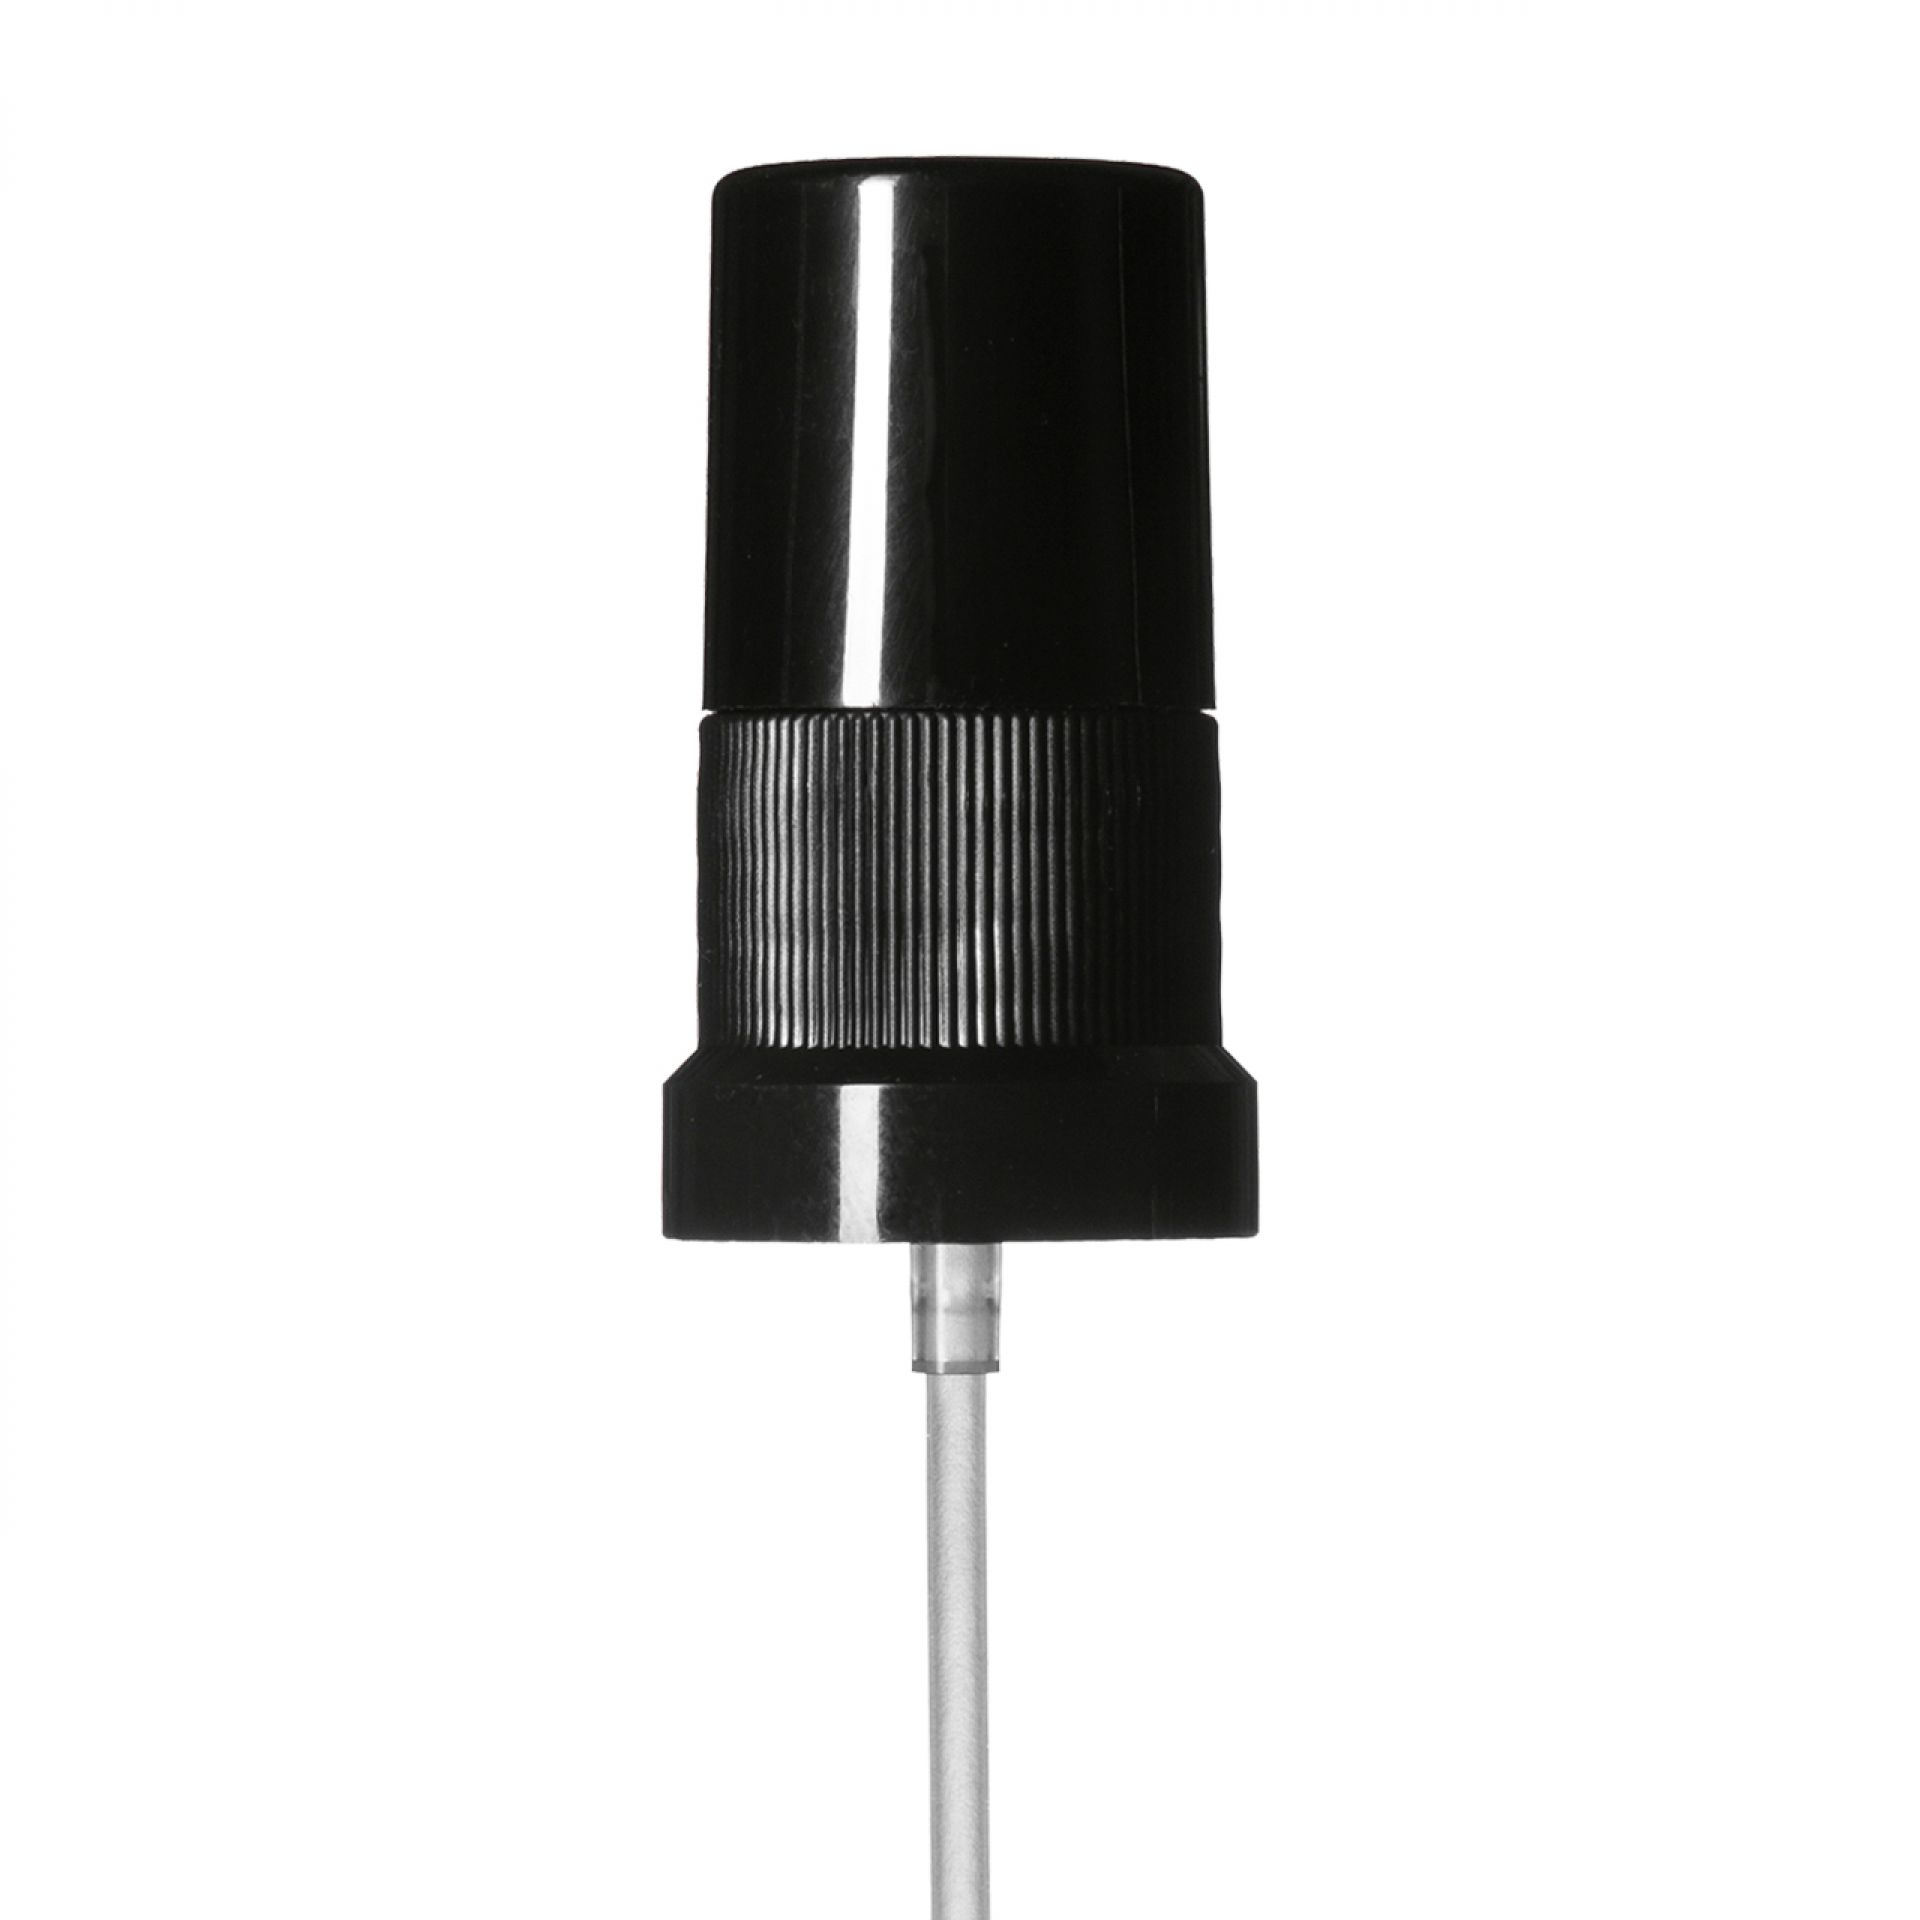 Mist sprayer Classic, DIN18, PP, black, ribbed, dose 0.10 ml, black overcap (Orion 60)